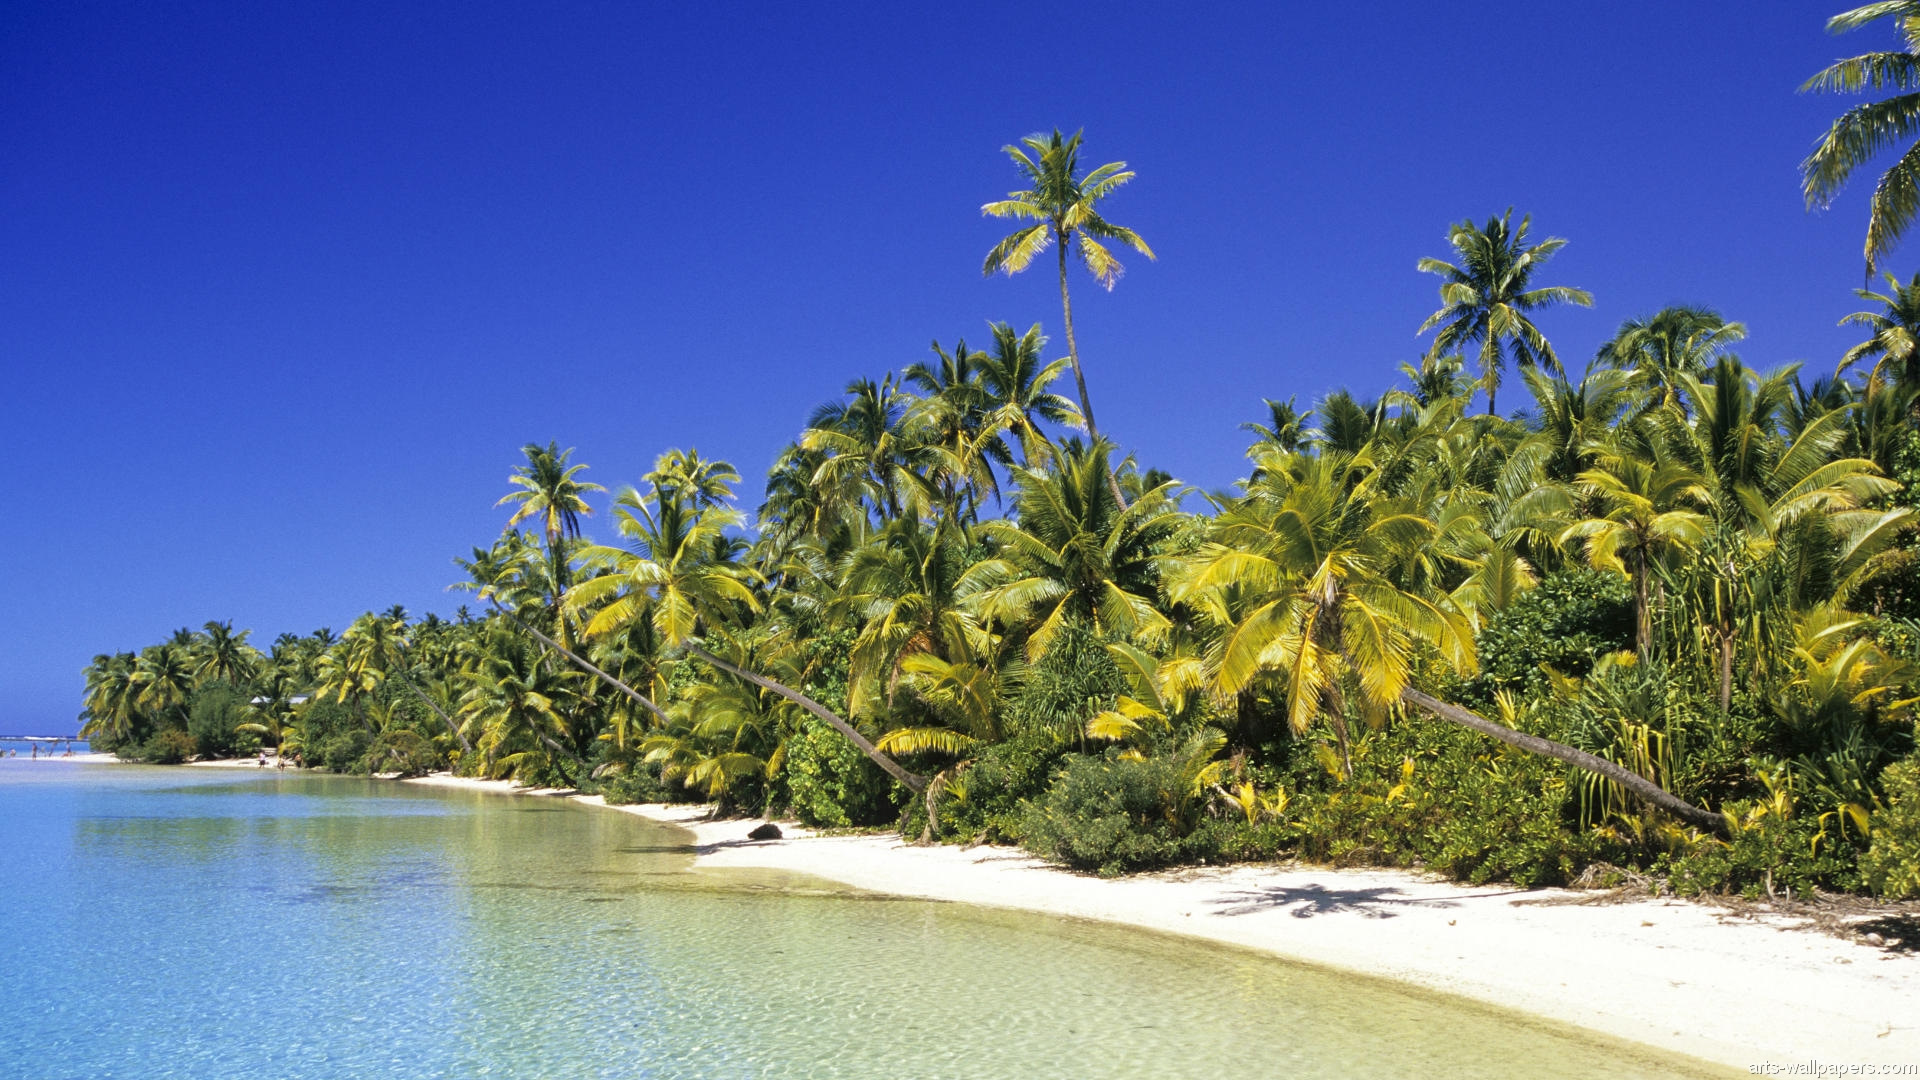 Island beach 2. Кокосовая Пальма острова Кука. Острова Кука 3. Острова Кука пляжи. Куба остров Кука.